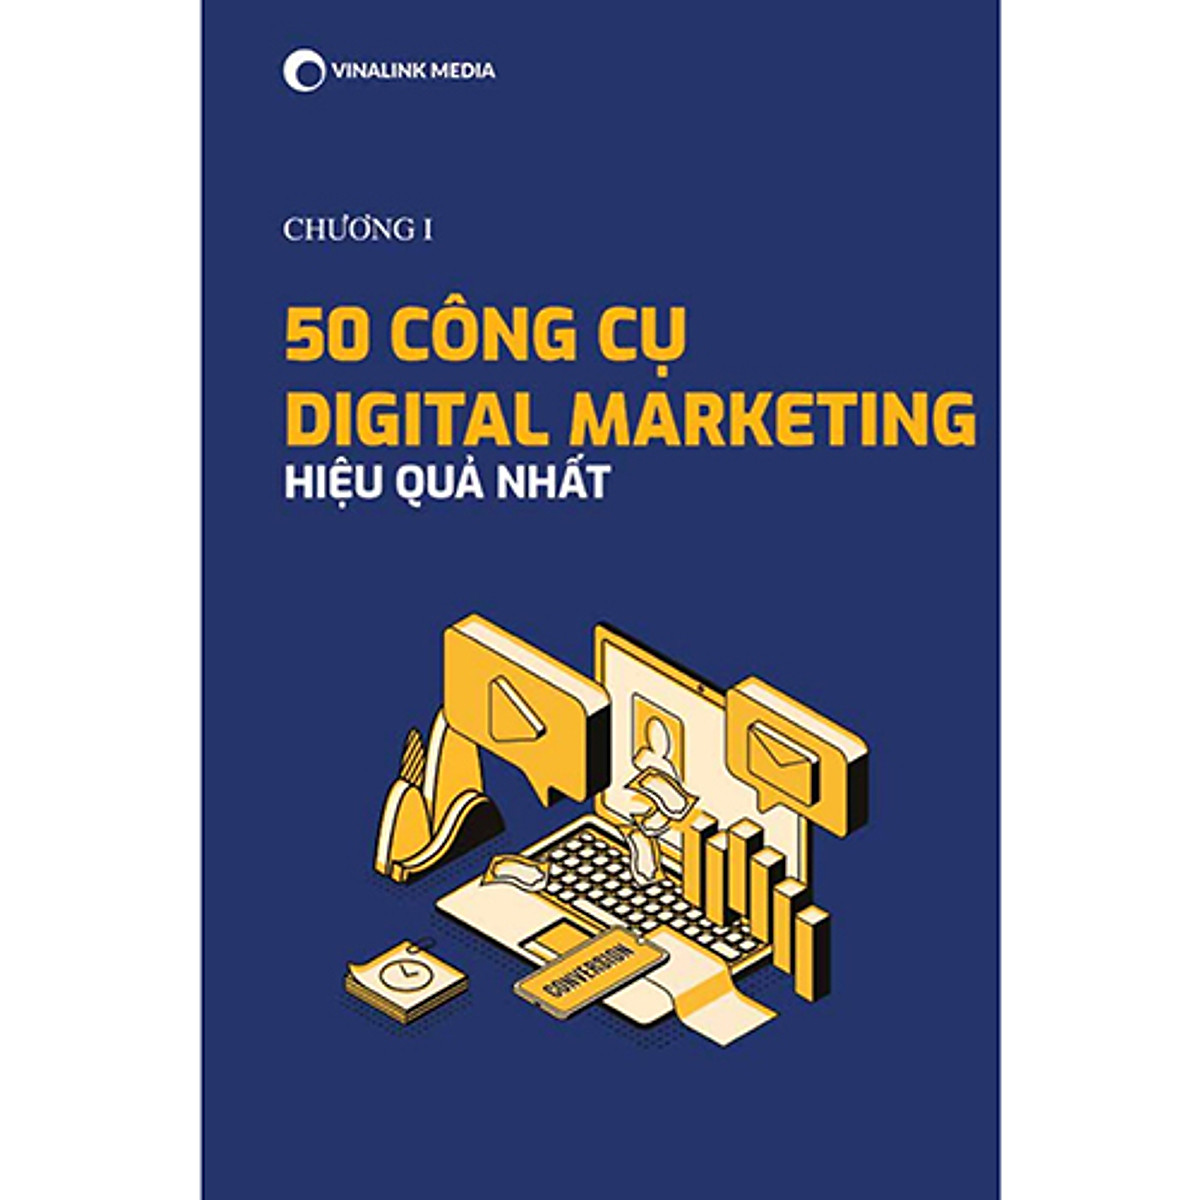 Top 50 Digital Marketing Tools - 50 Công cụ Digital Marketing hiệu quả nhất.